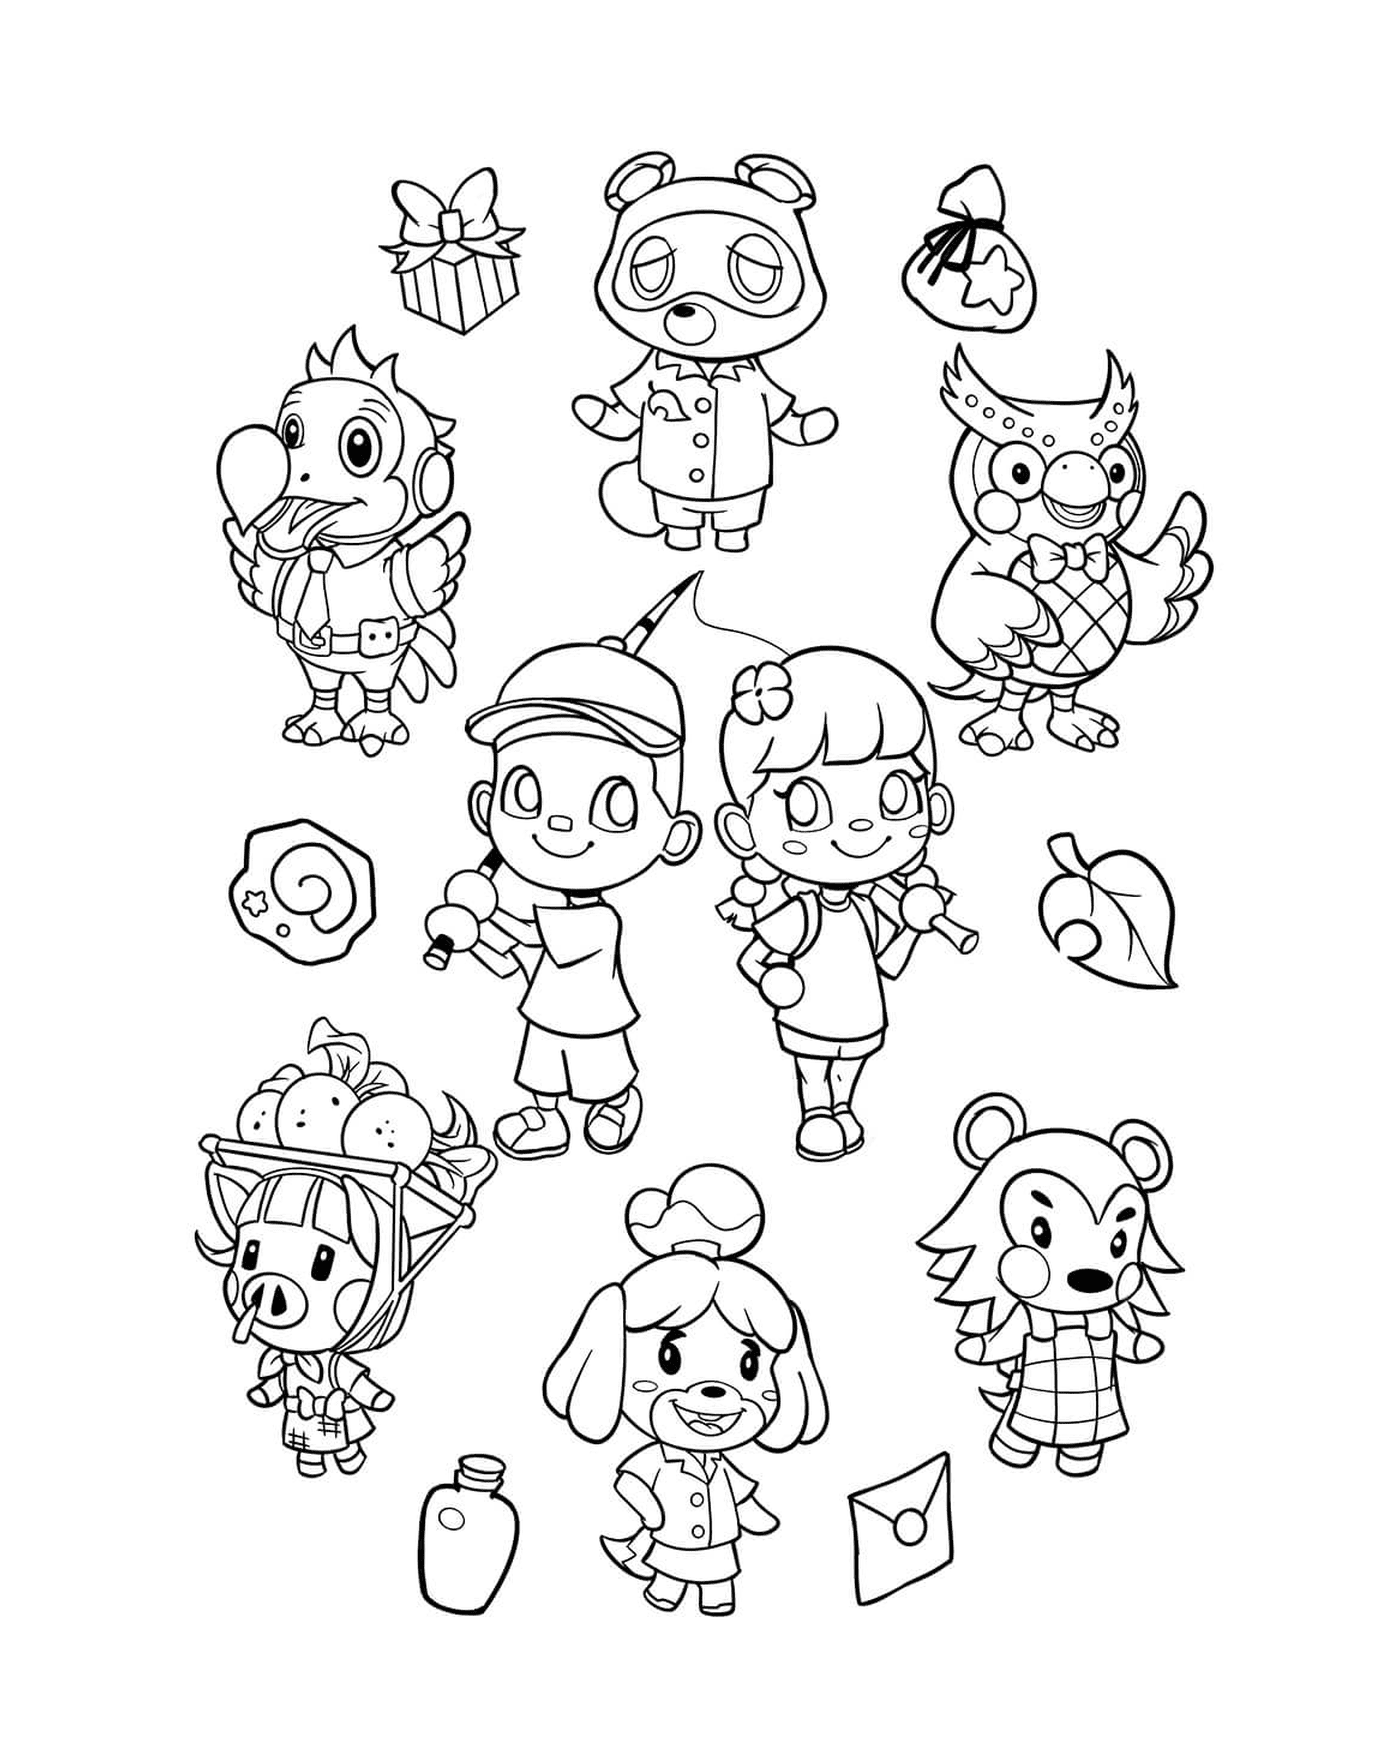  Animal Crossing New Horizons, varios personajes de Animal Crossing 